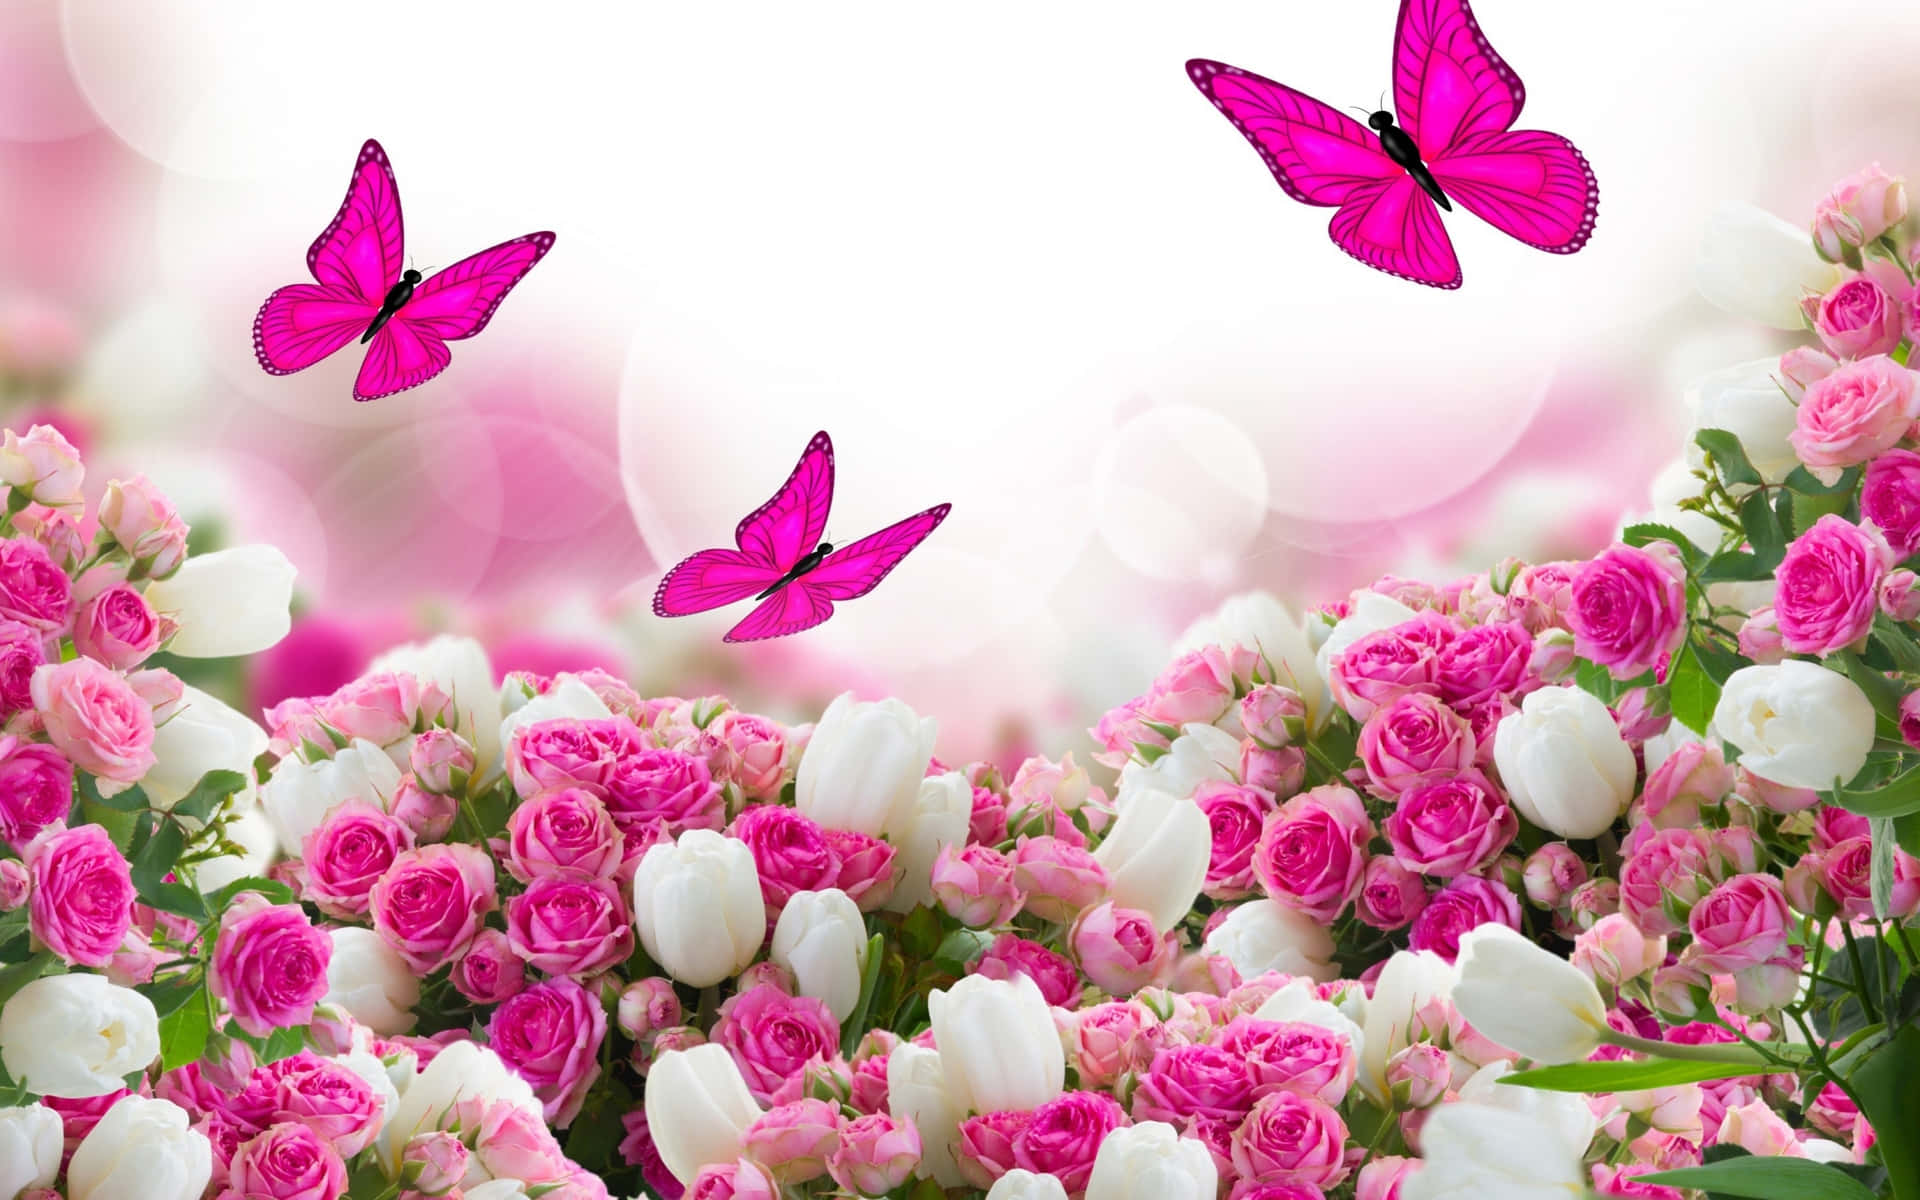 Magnificent Pink Flowers And Butterflies Wallpaper